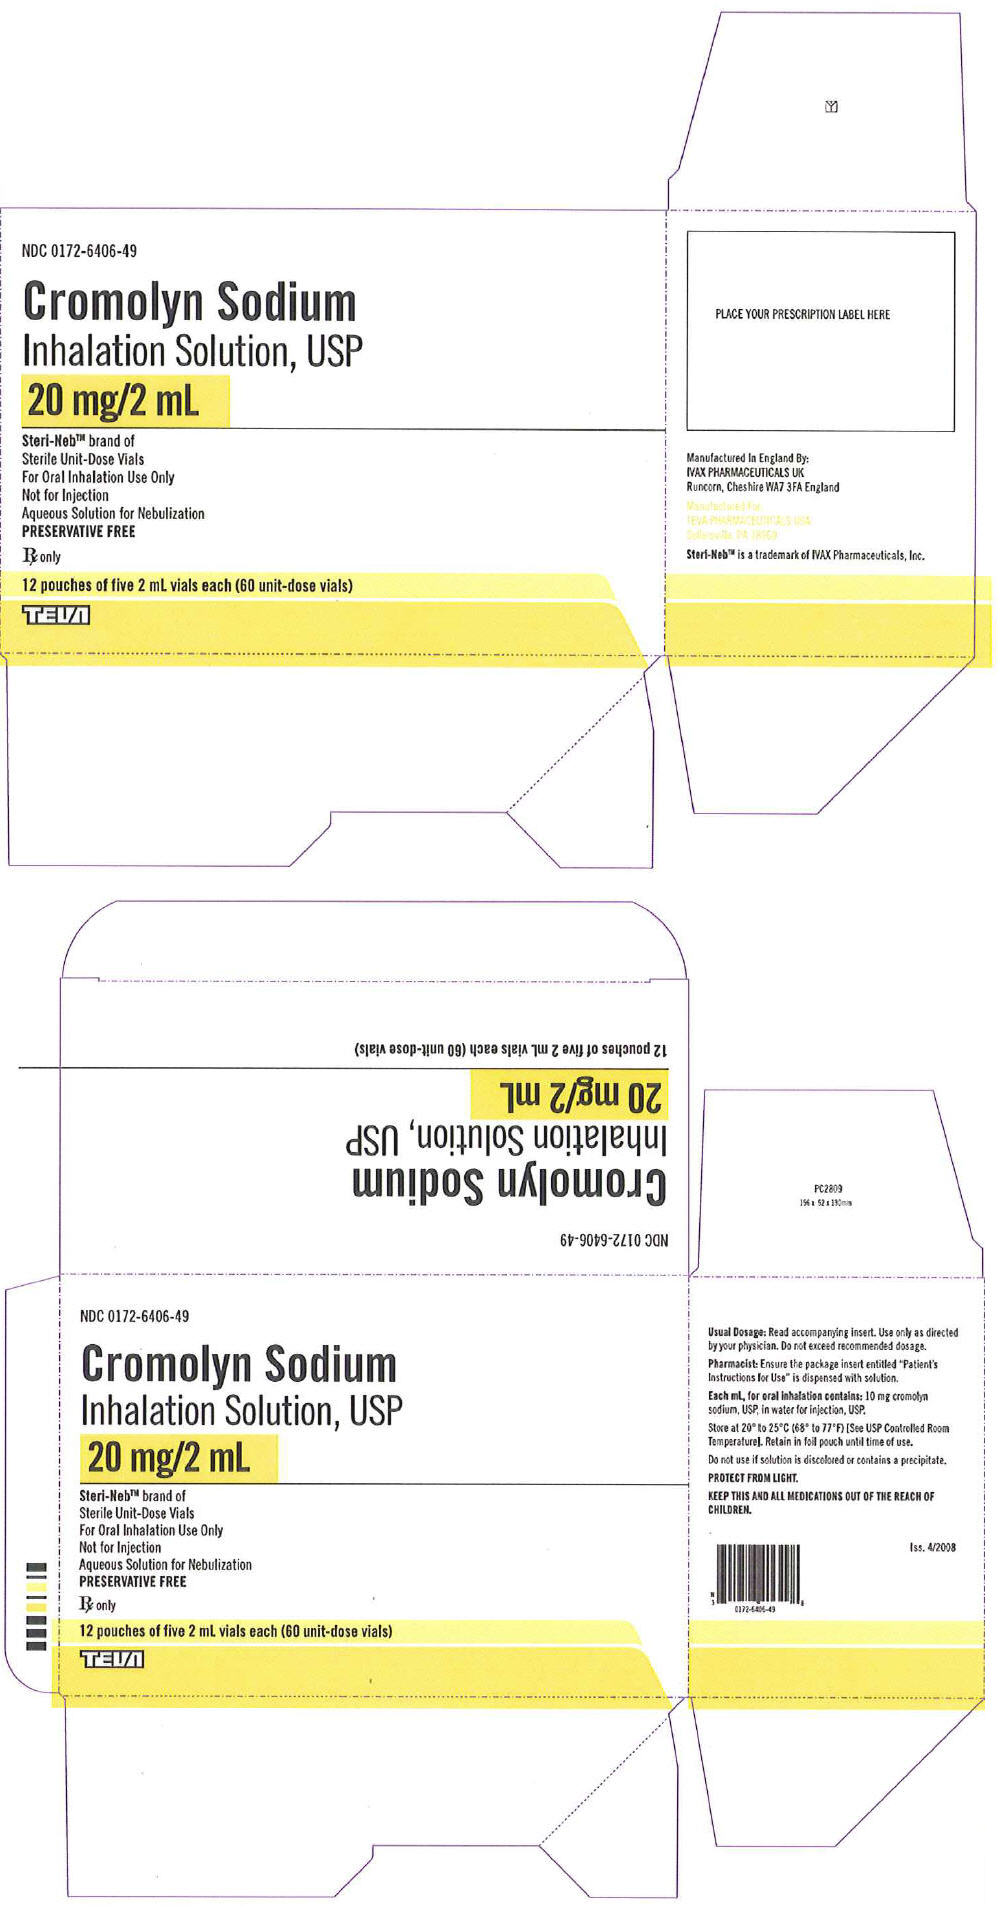 File:Cromolyn sodium image.jpg